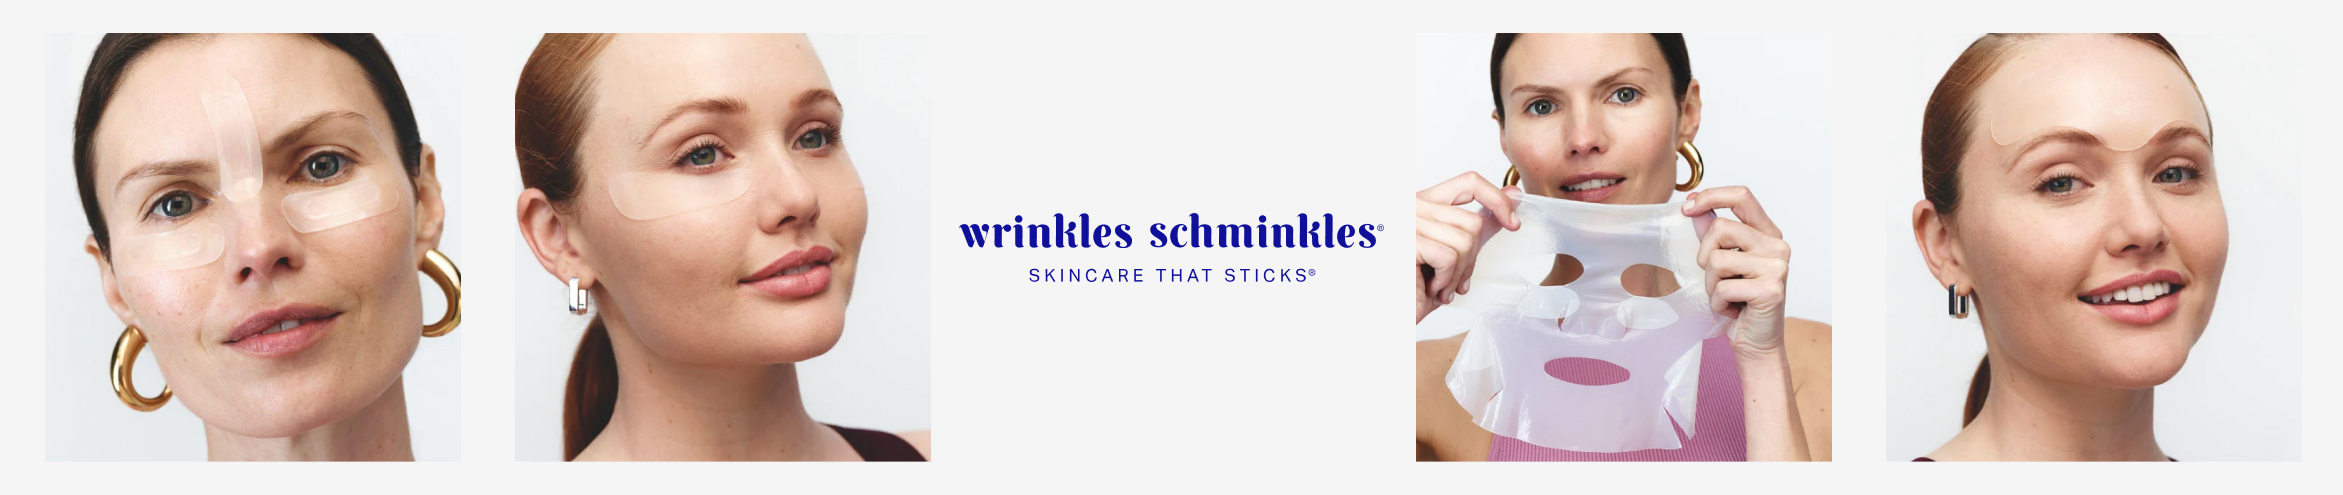 Wrinkles Schminkles - Face Serum & Treatment